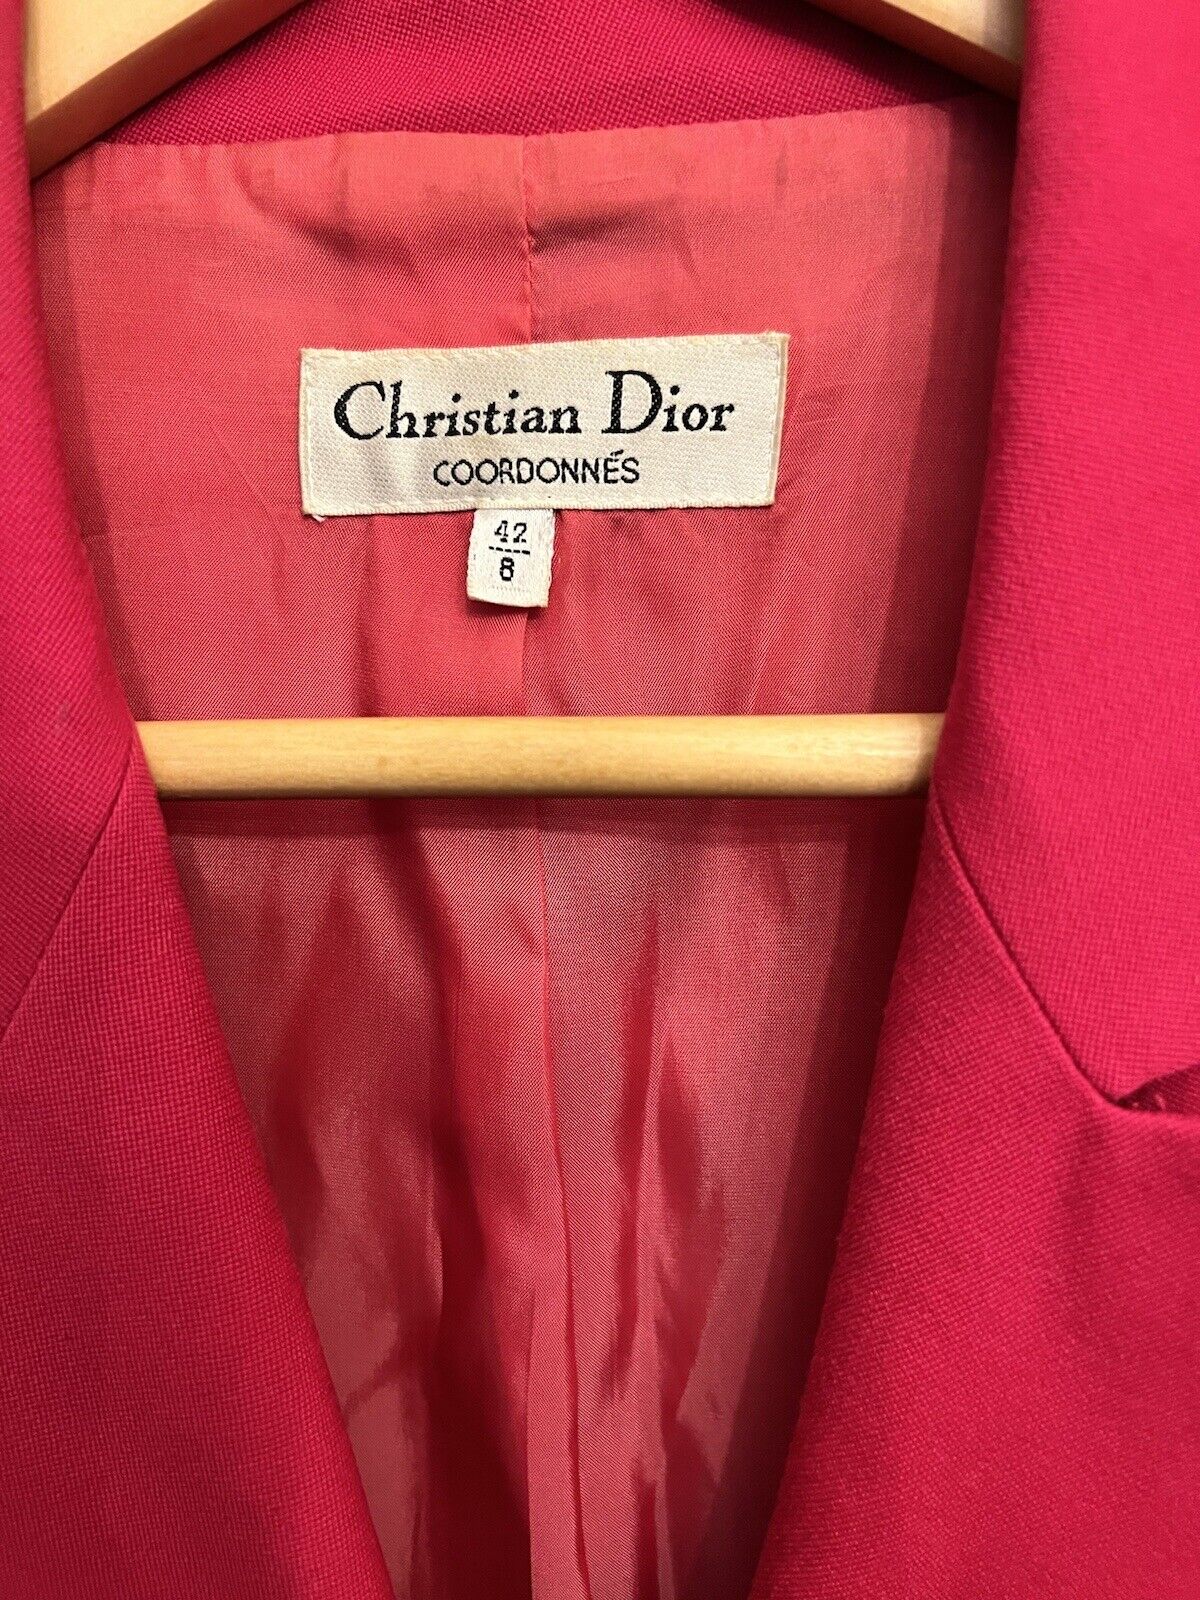 1980s christian dior blazer